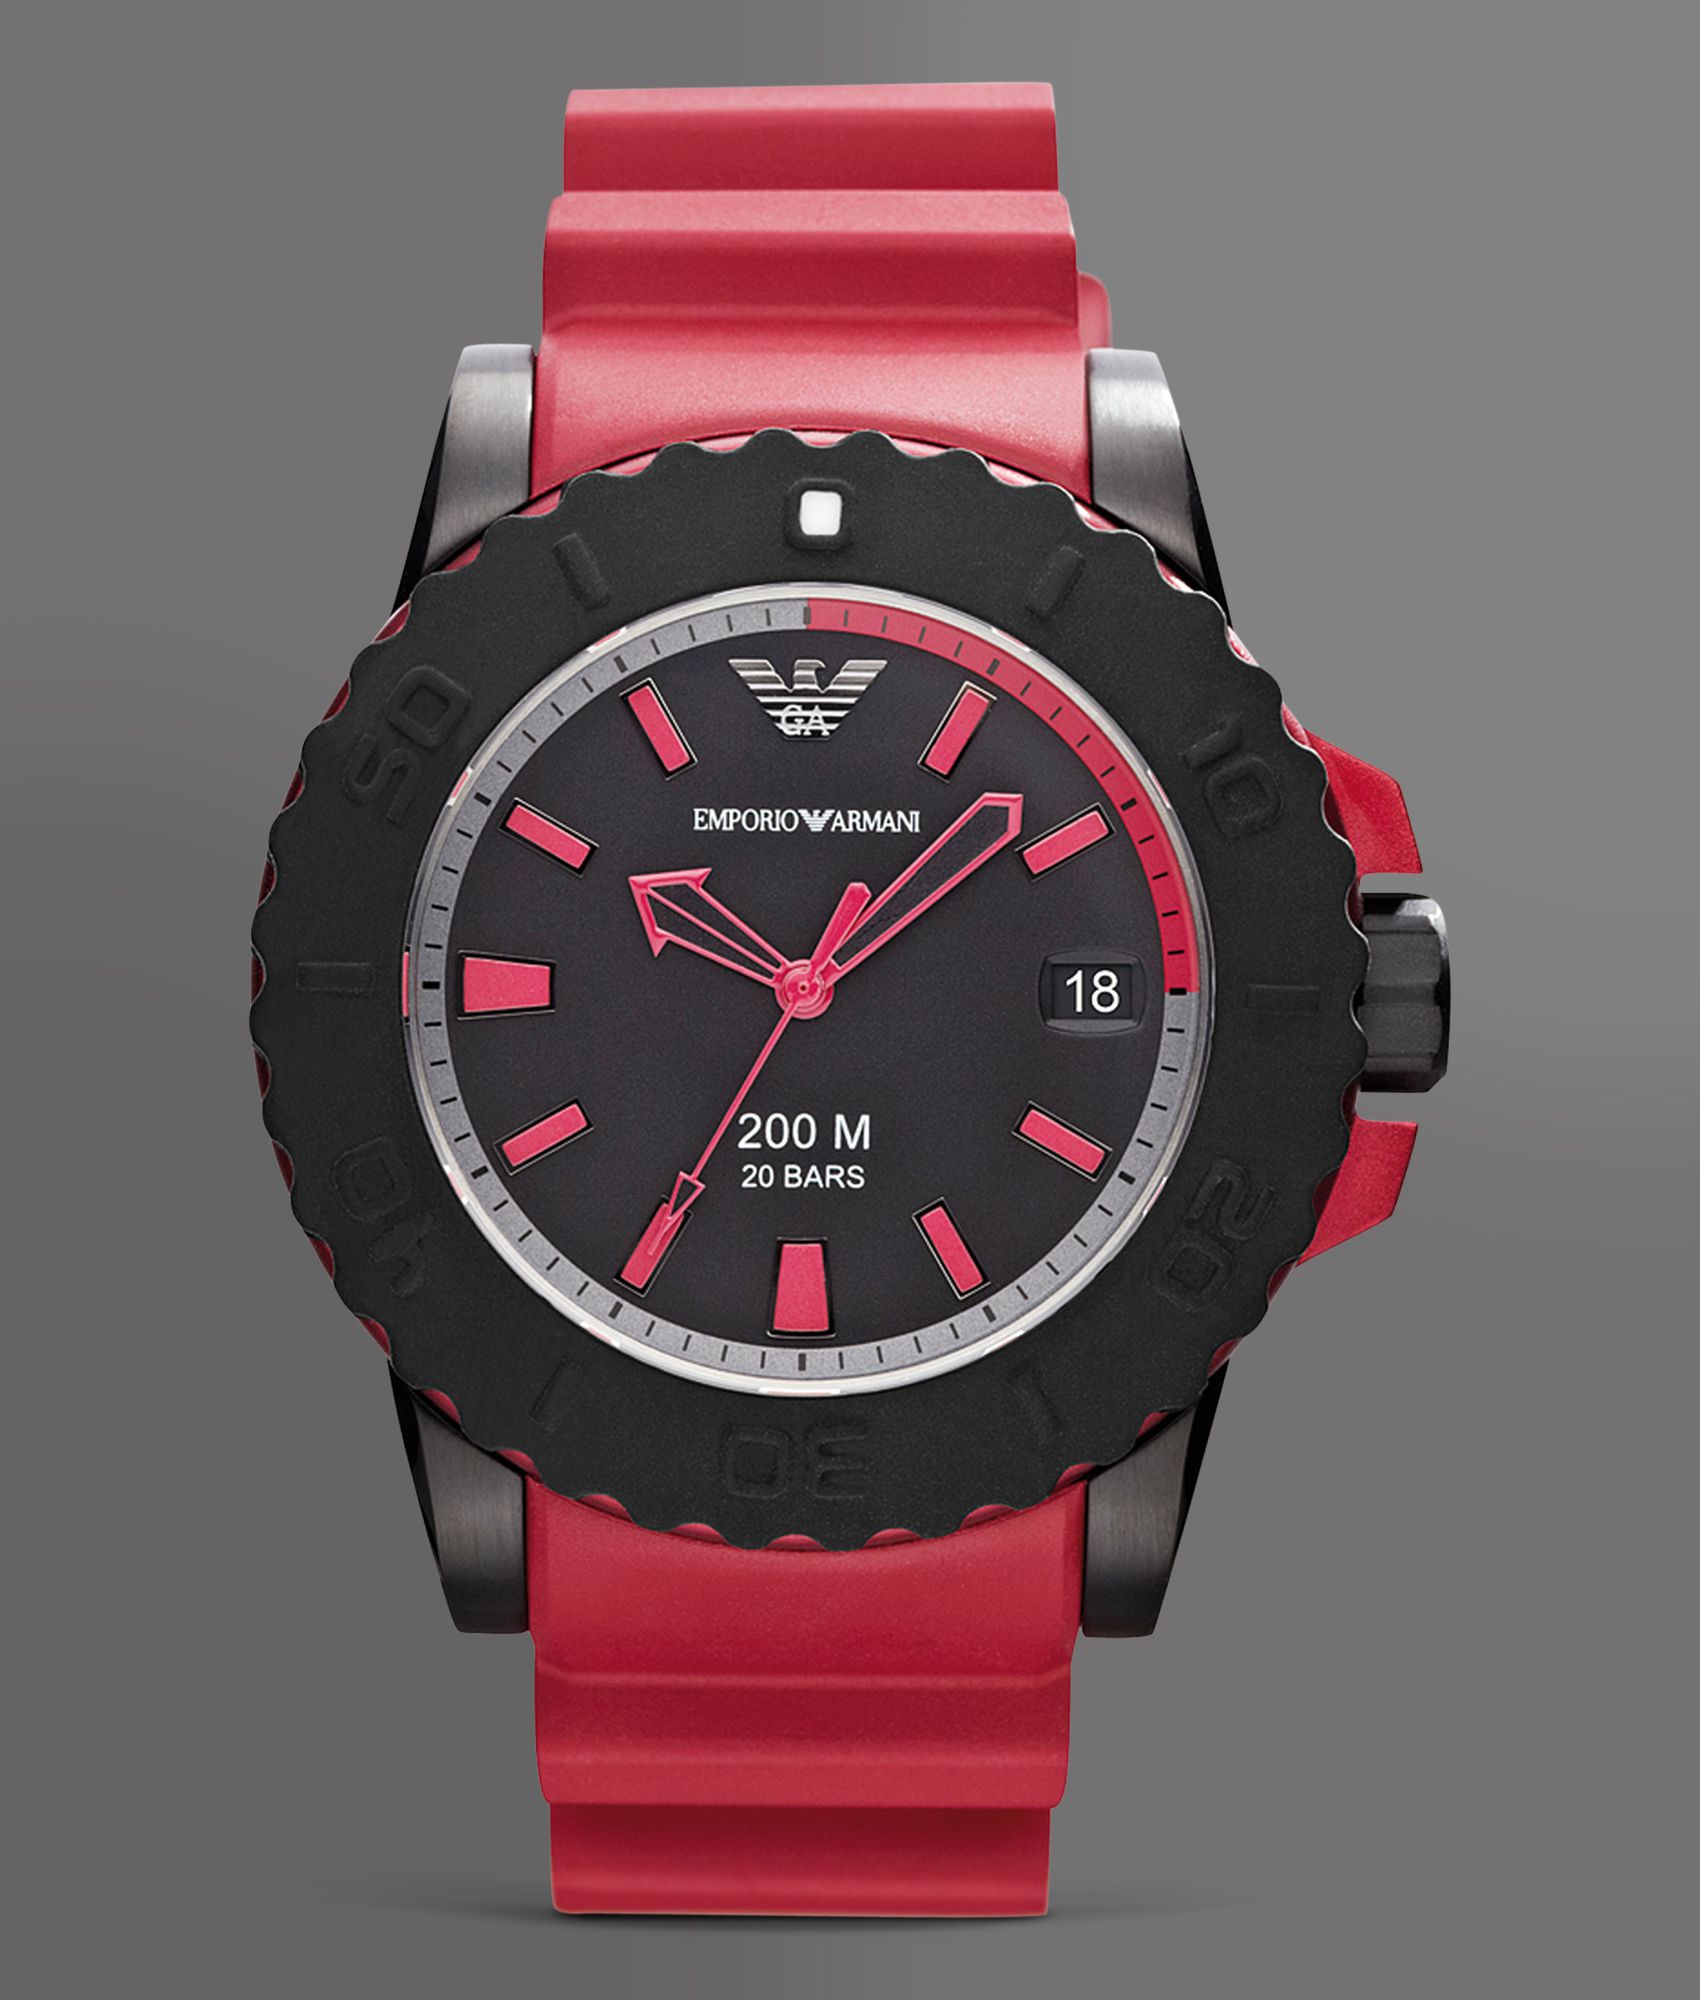 Armani Watch - Buy Emporio Armani Men's AR0673 Watch Online in India at